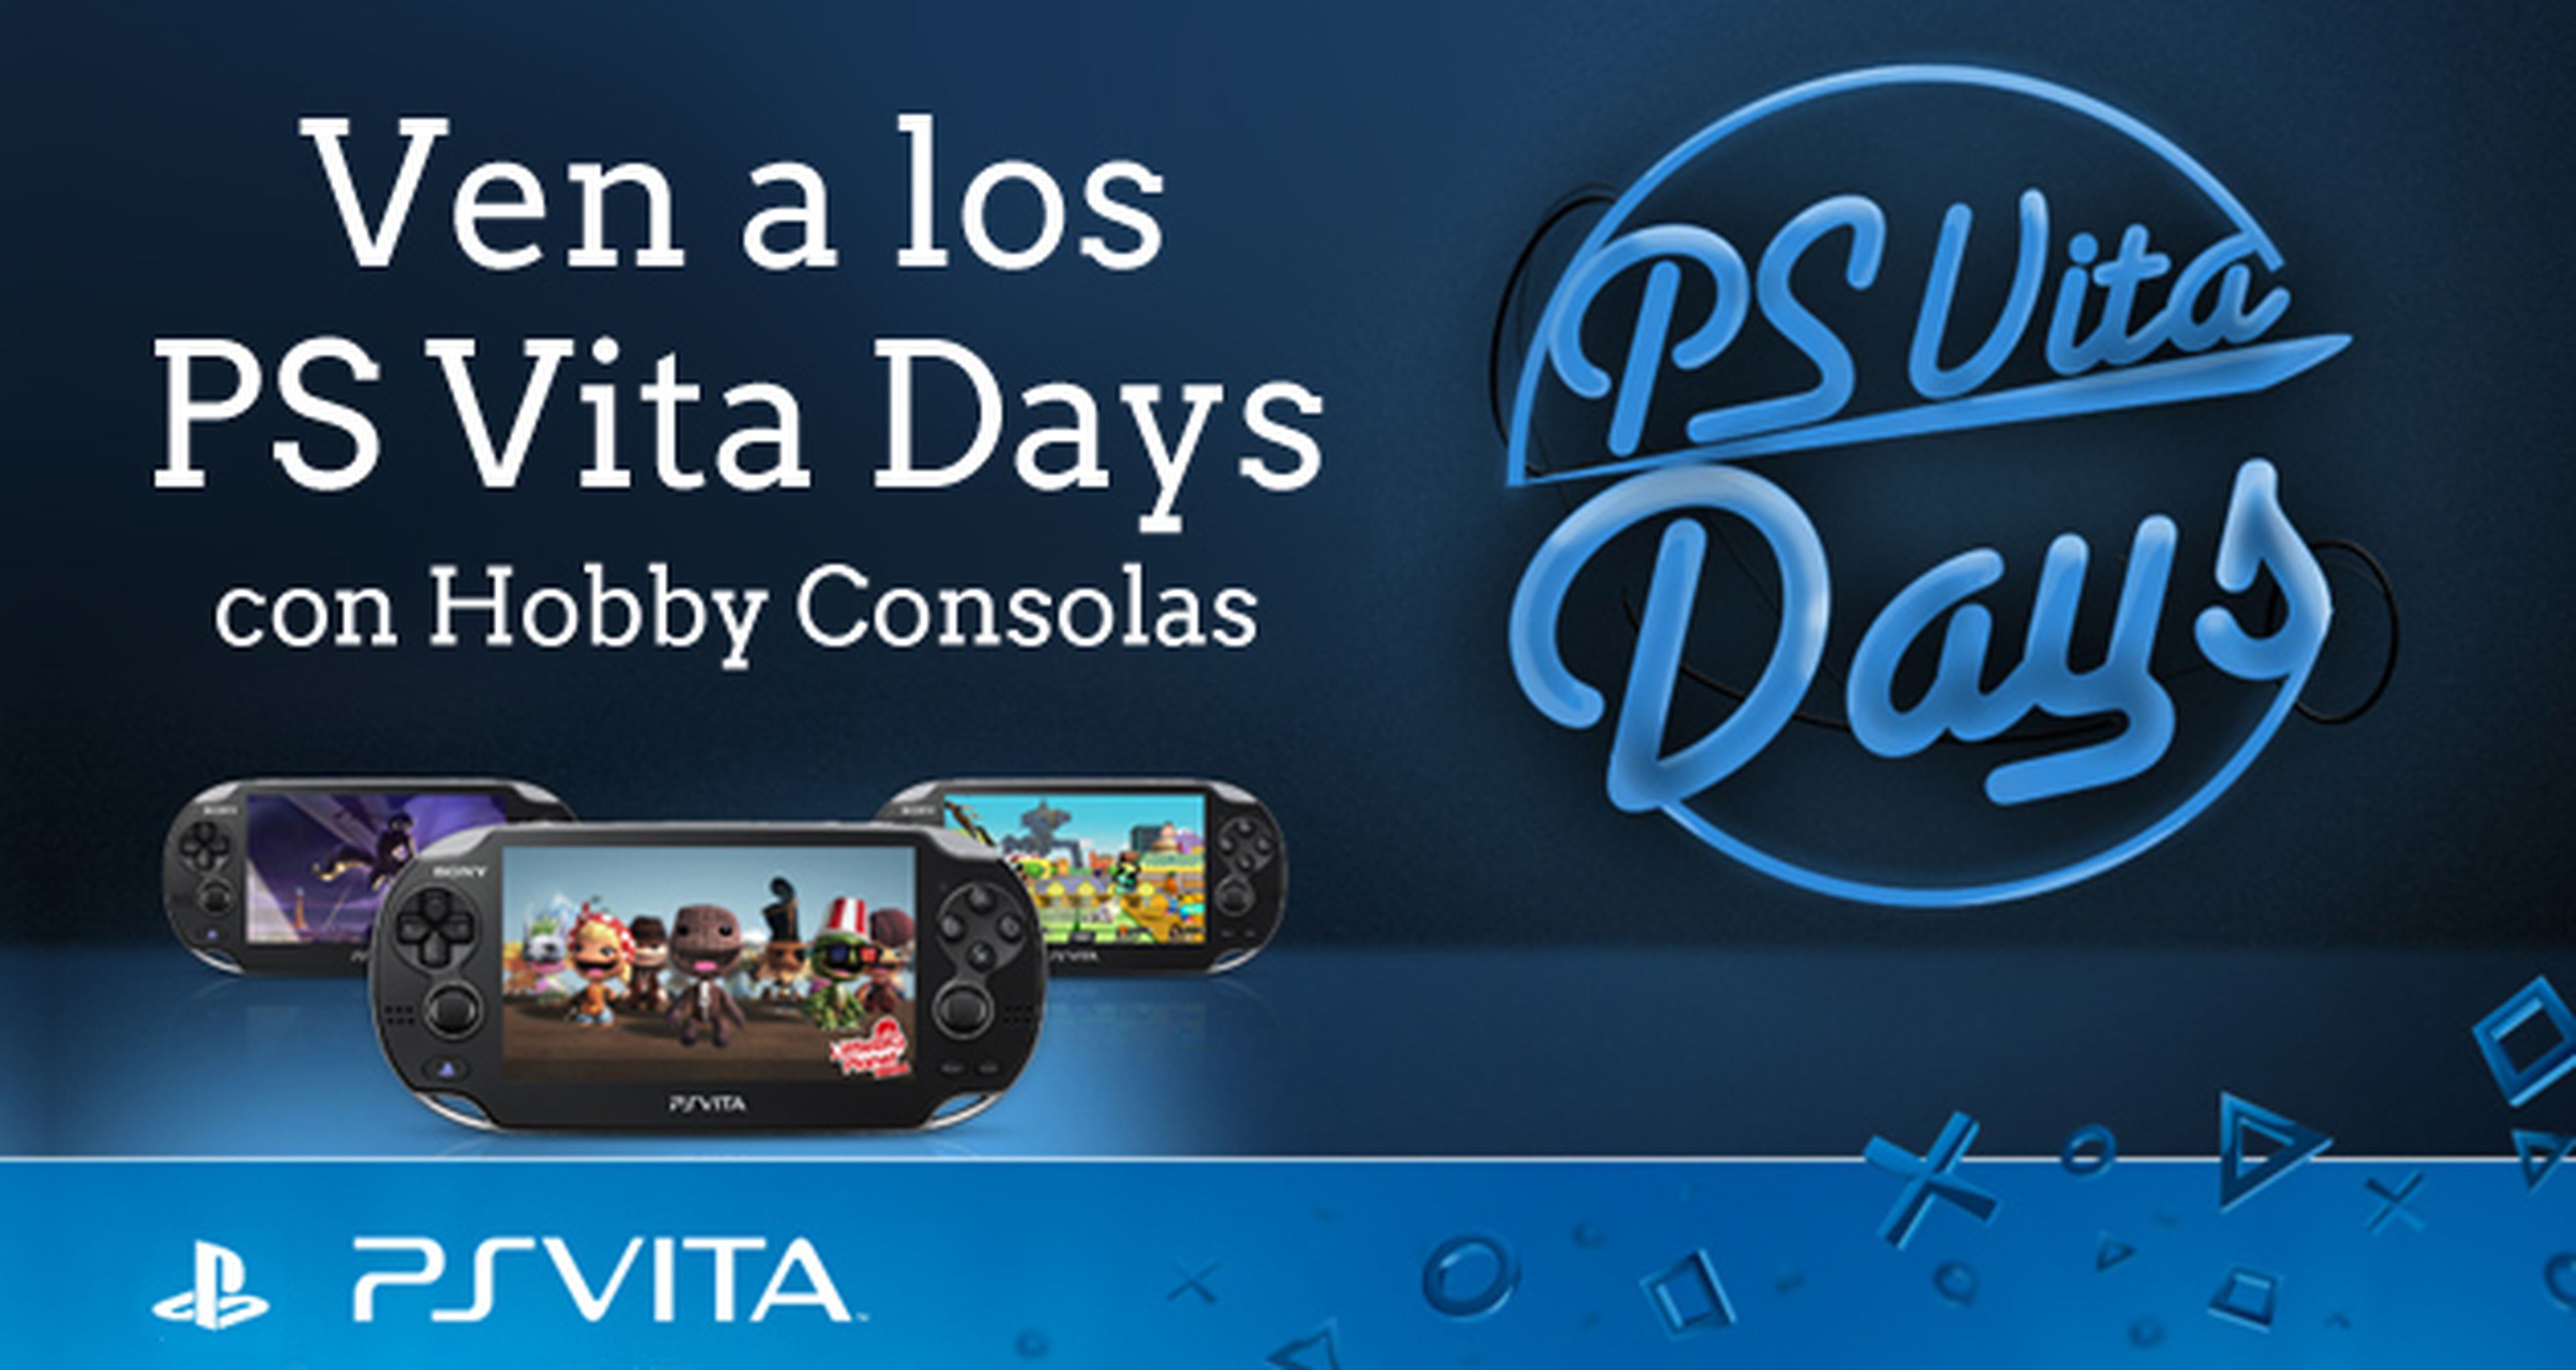 Hobby Consolas te invita a los PS Vita Days